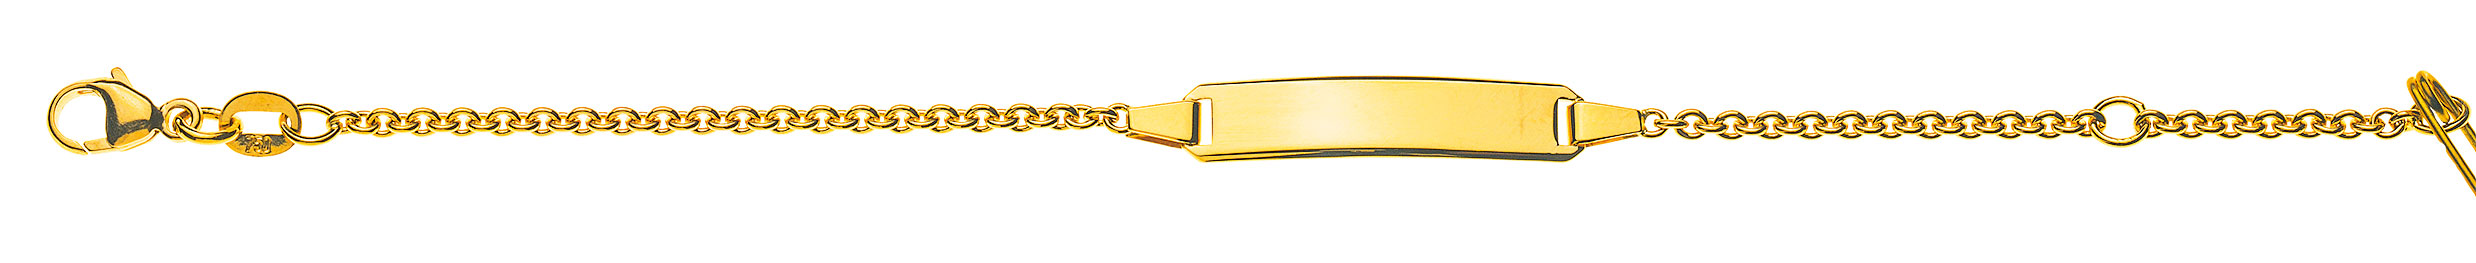 AURONOS Prestige ID bracelet 18k yellow gold round anchor chain 18cm